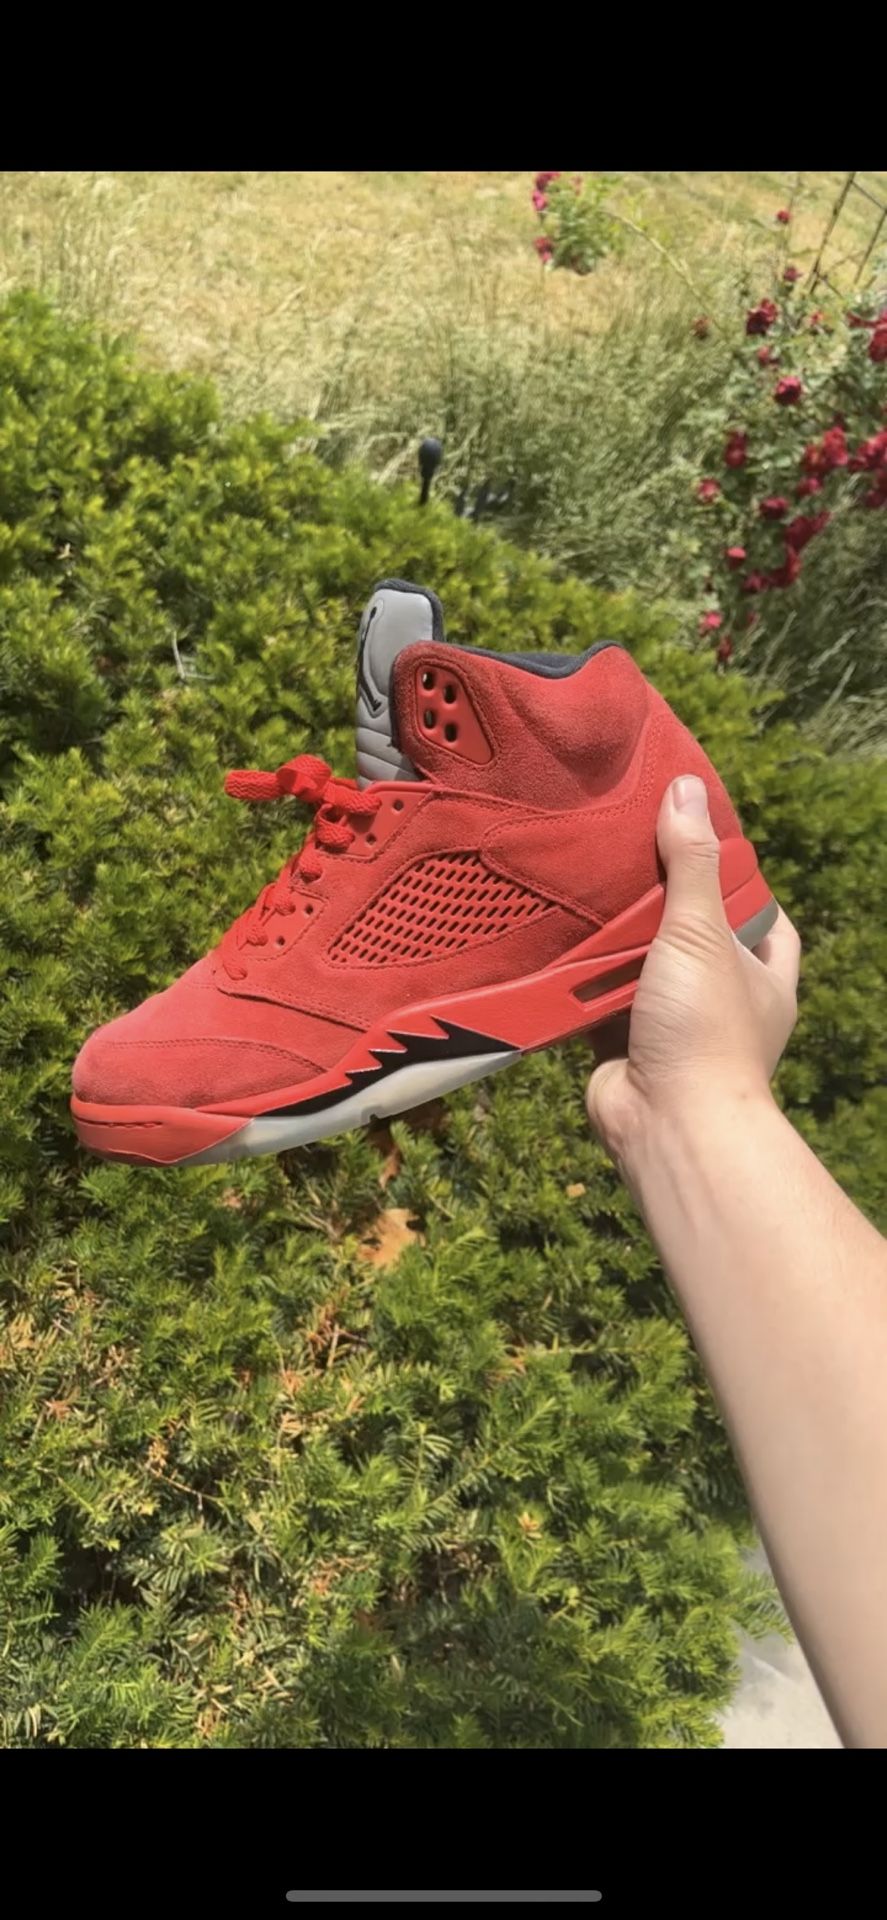 Jordan 5 Red Suede Size 10.5